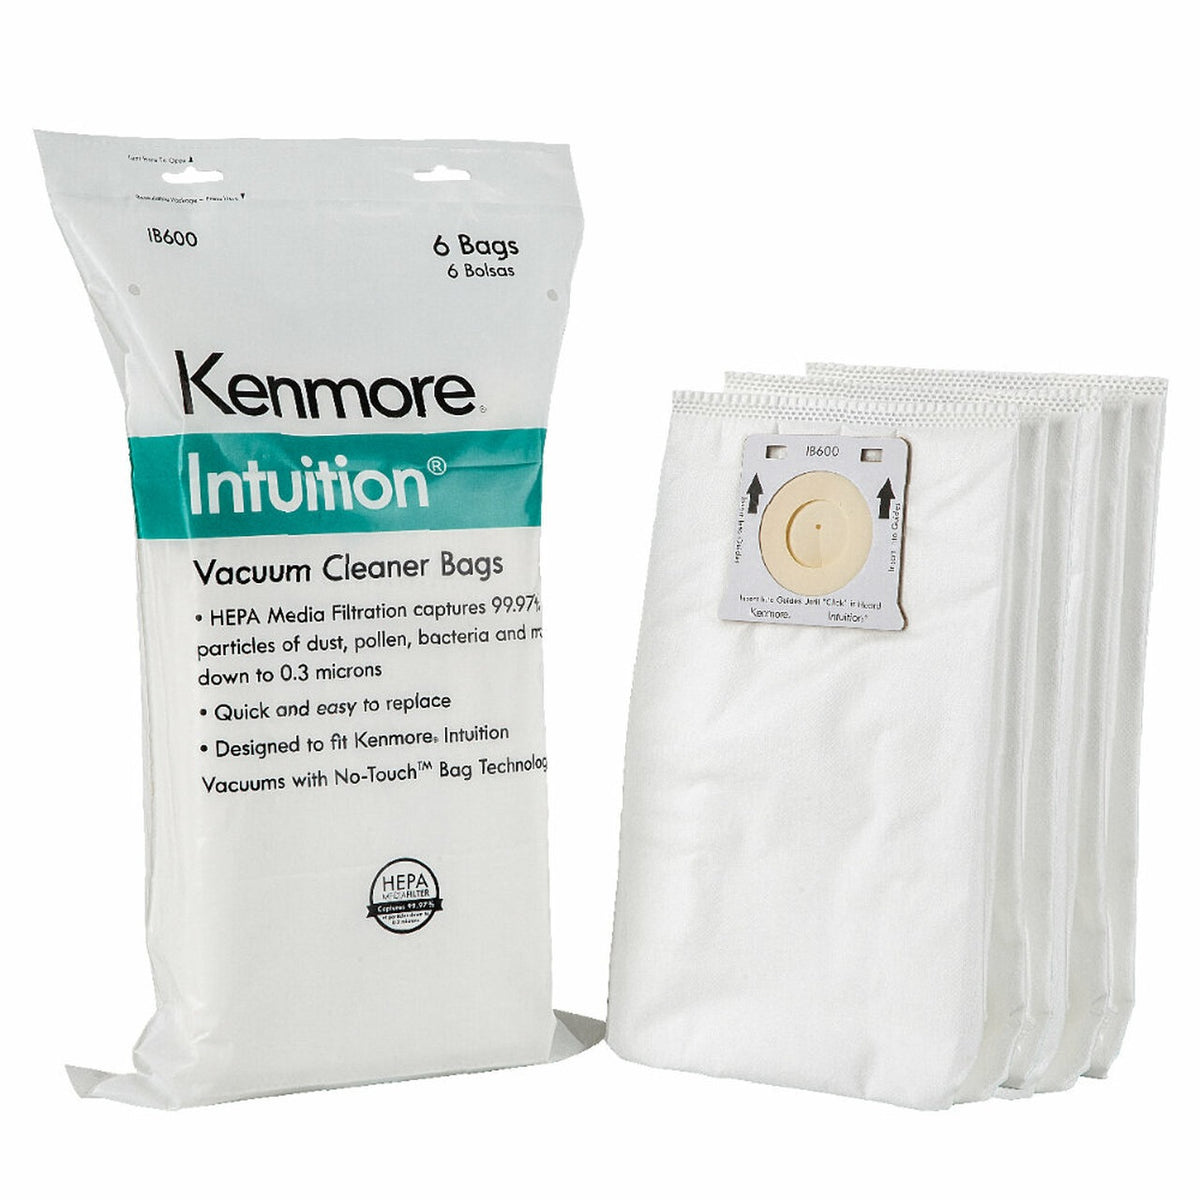 Kenmore IB600 Intuition Vacuum Cleaner Bags